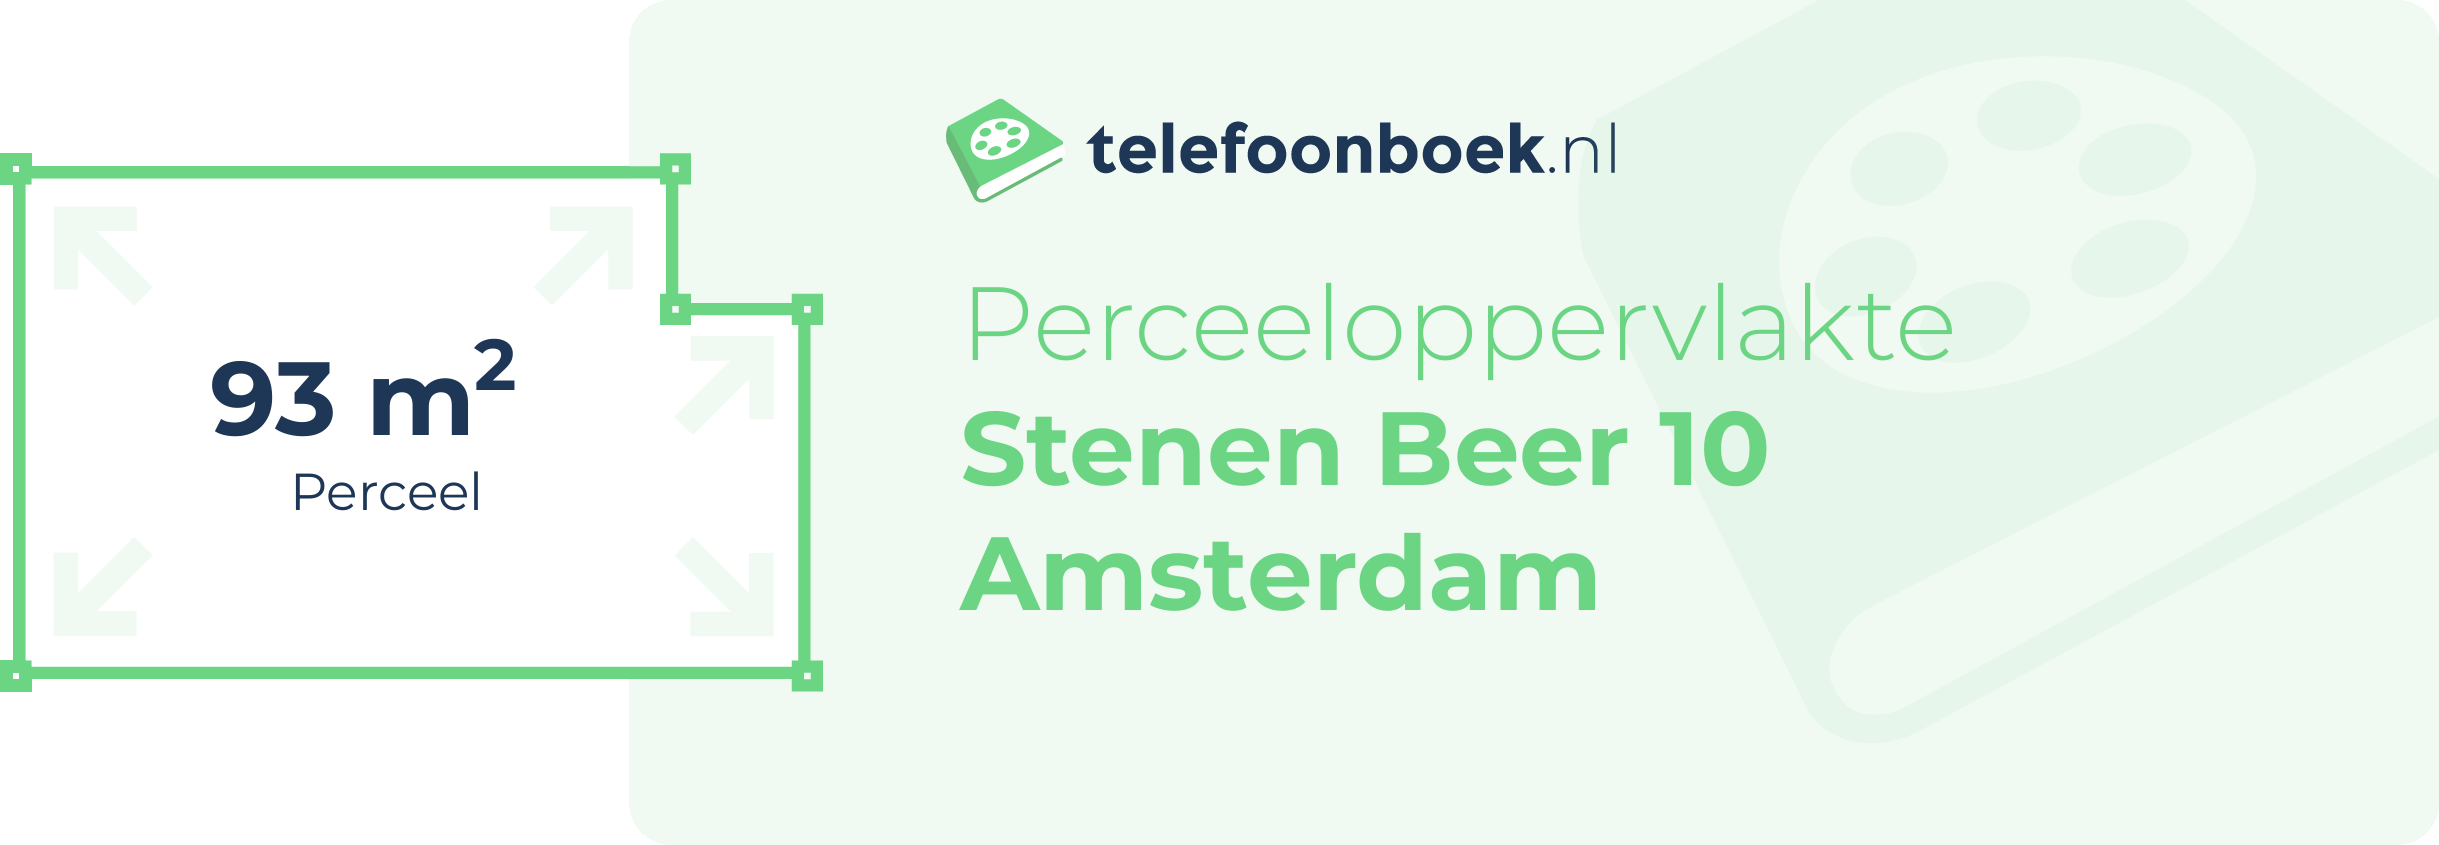 Perceeloppervlakte Stenen Beer 10 Amsterdam